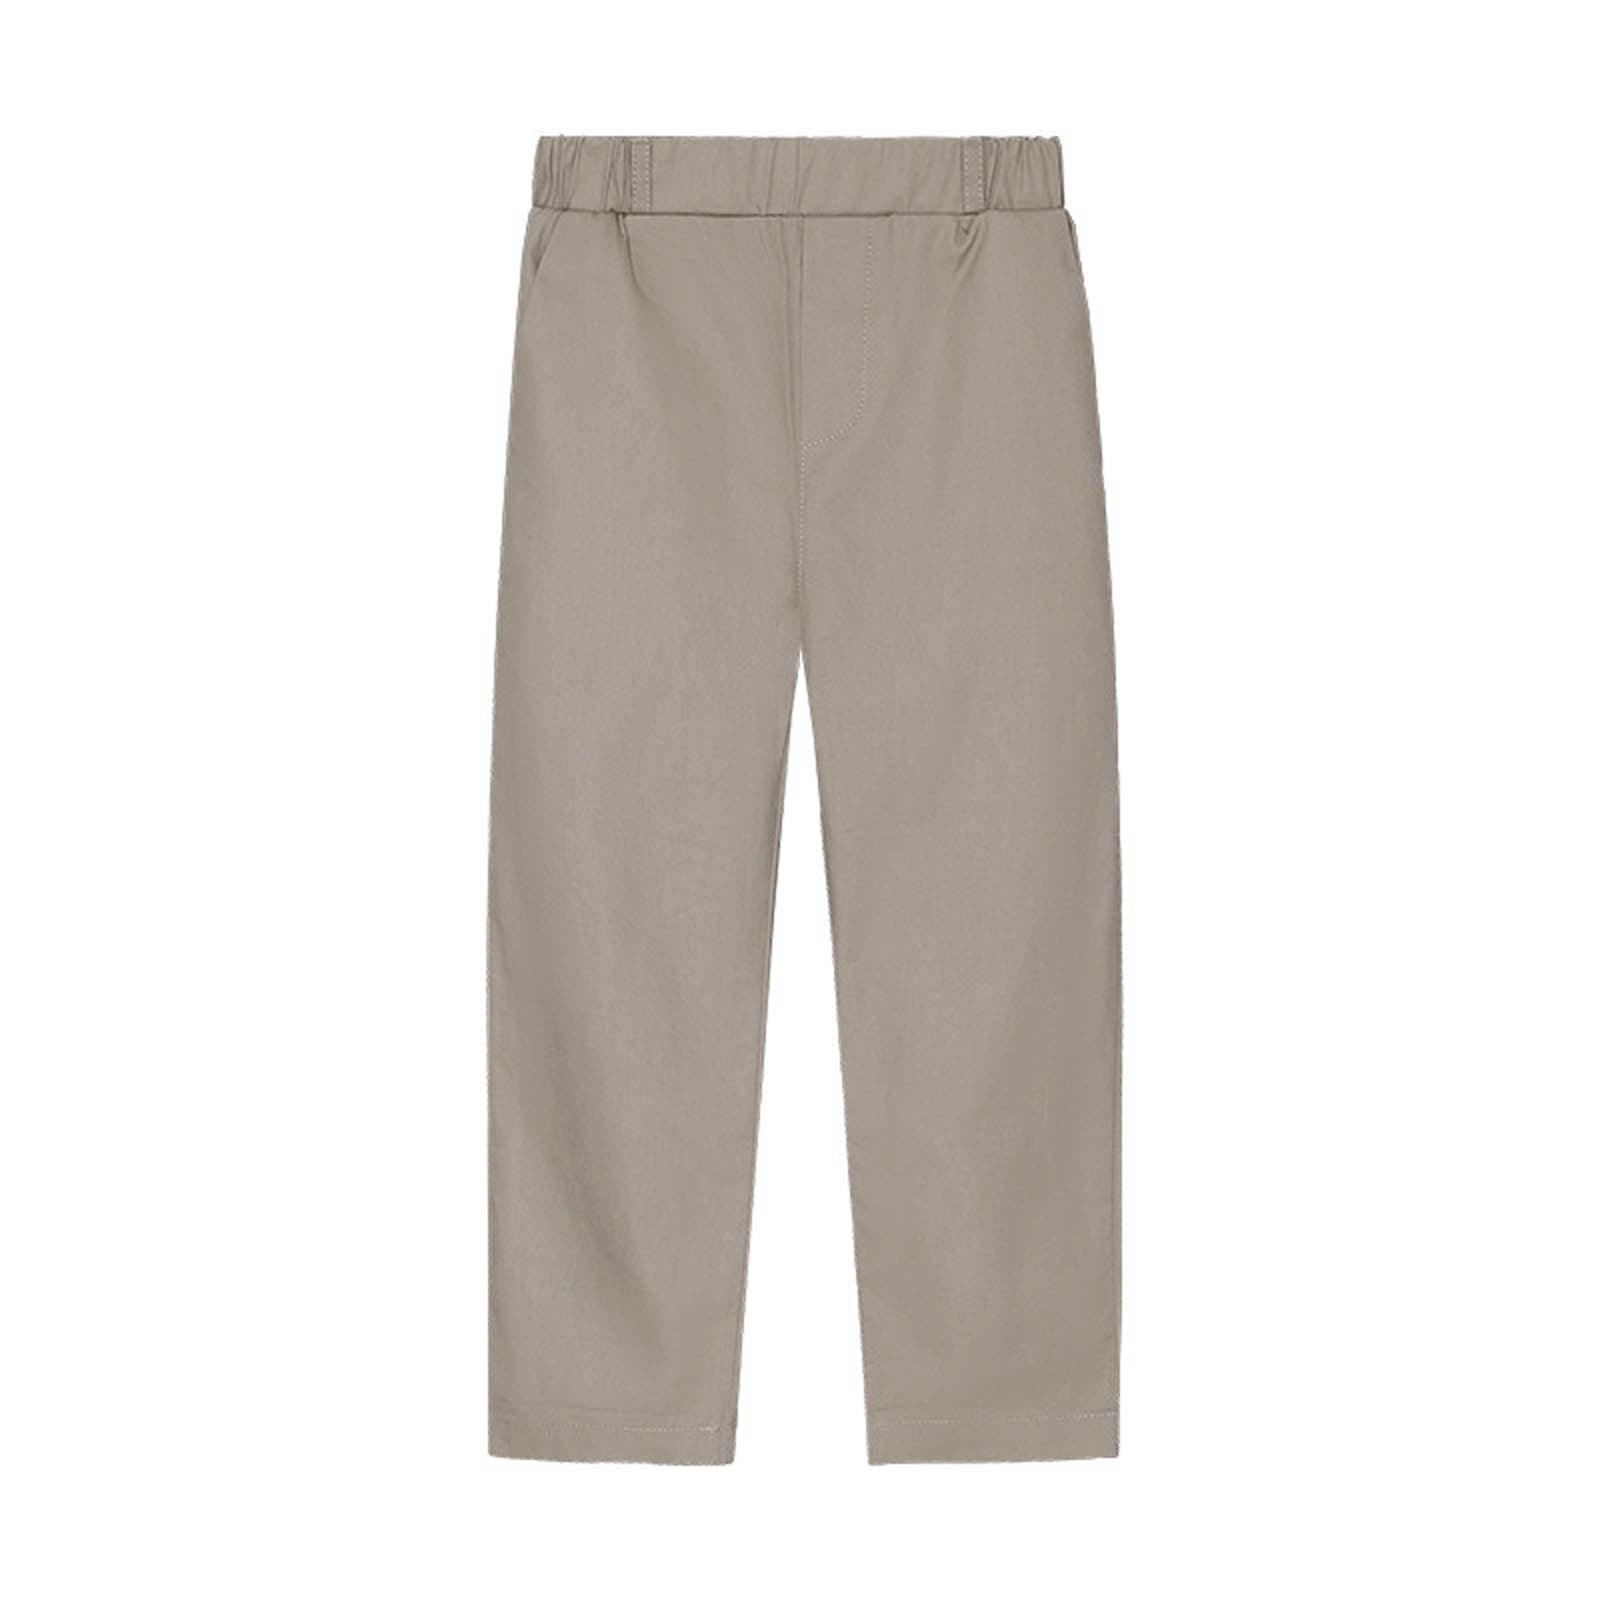 Boys Black Trousers Kids Zip & Clip with Half Elastic Waist School Uniform  Pants | eBay